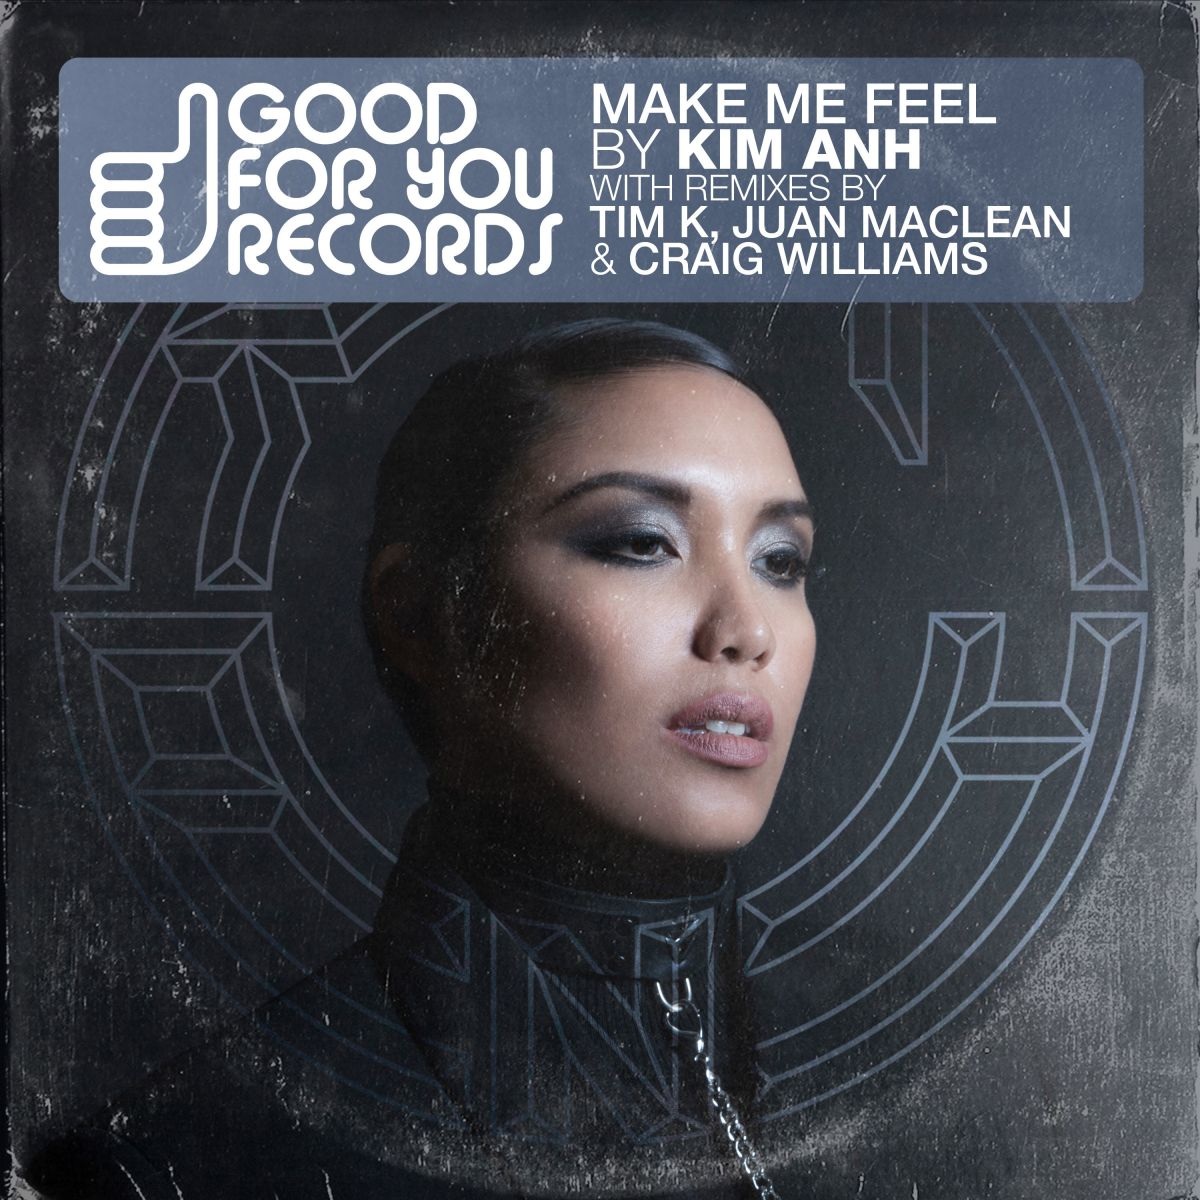 Kim Anh - Make Me Feel / Good For You Records